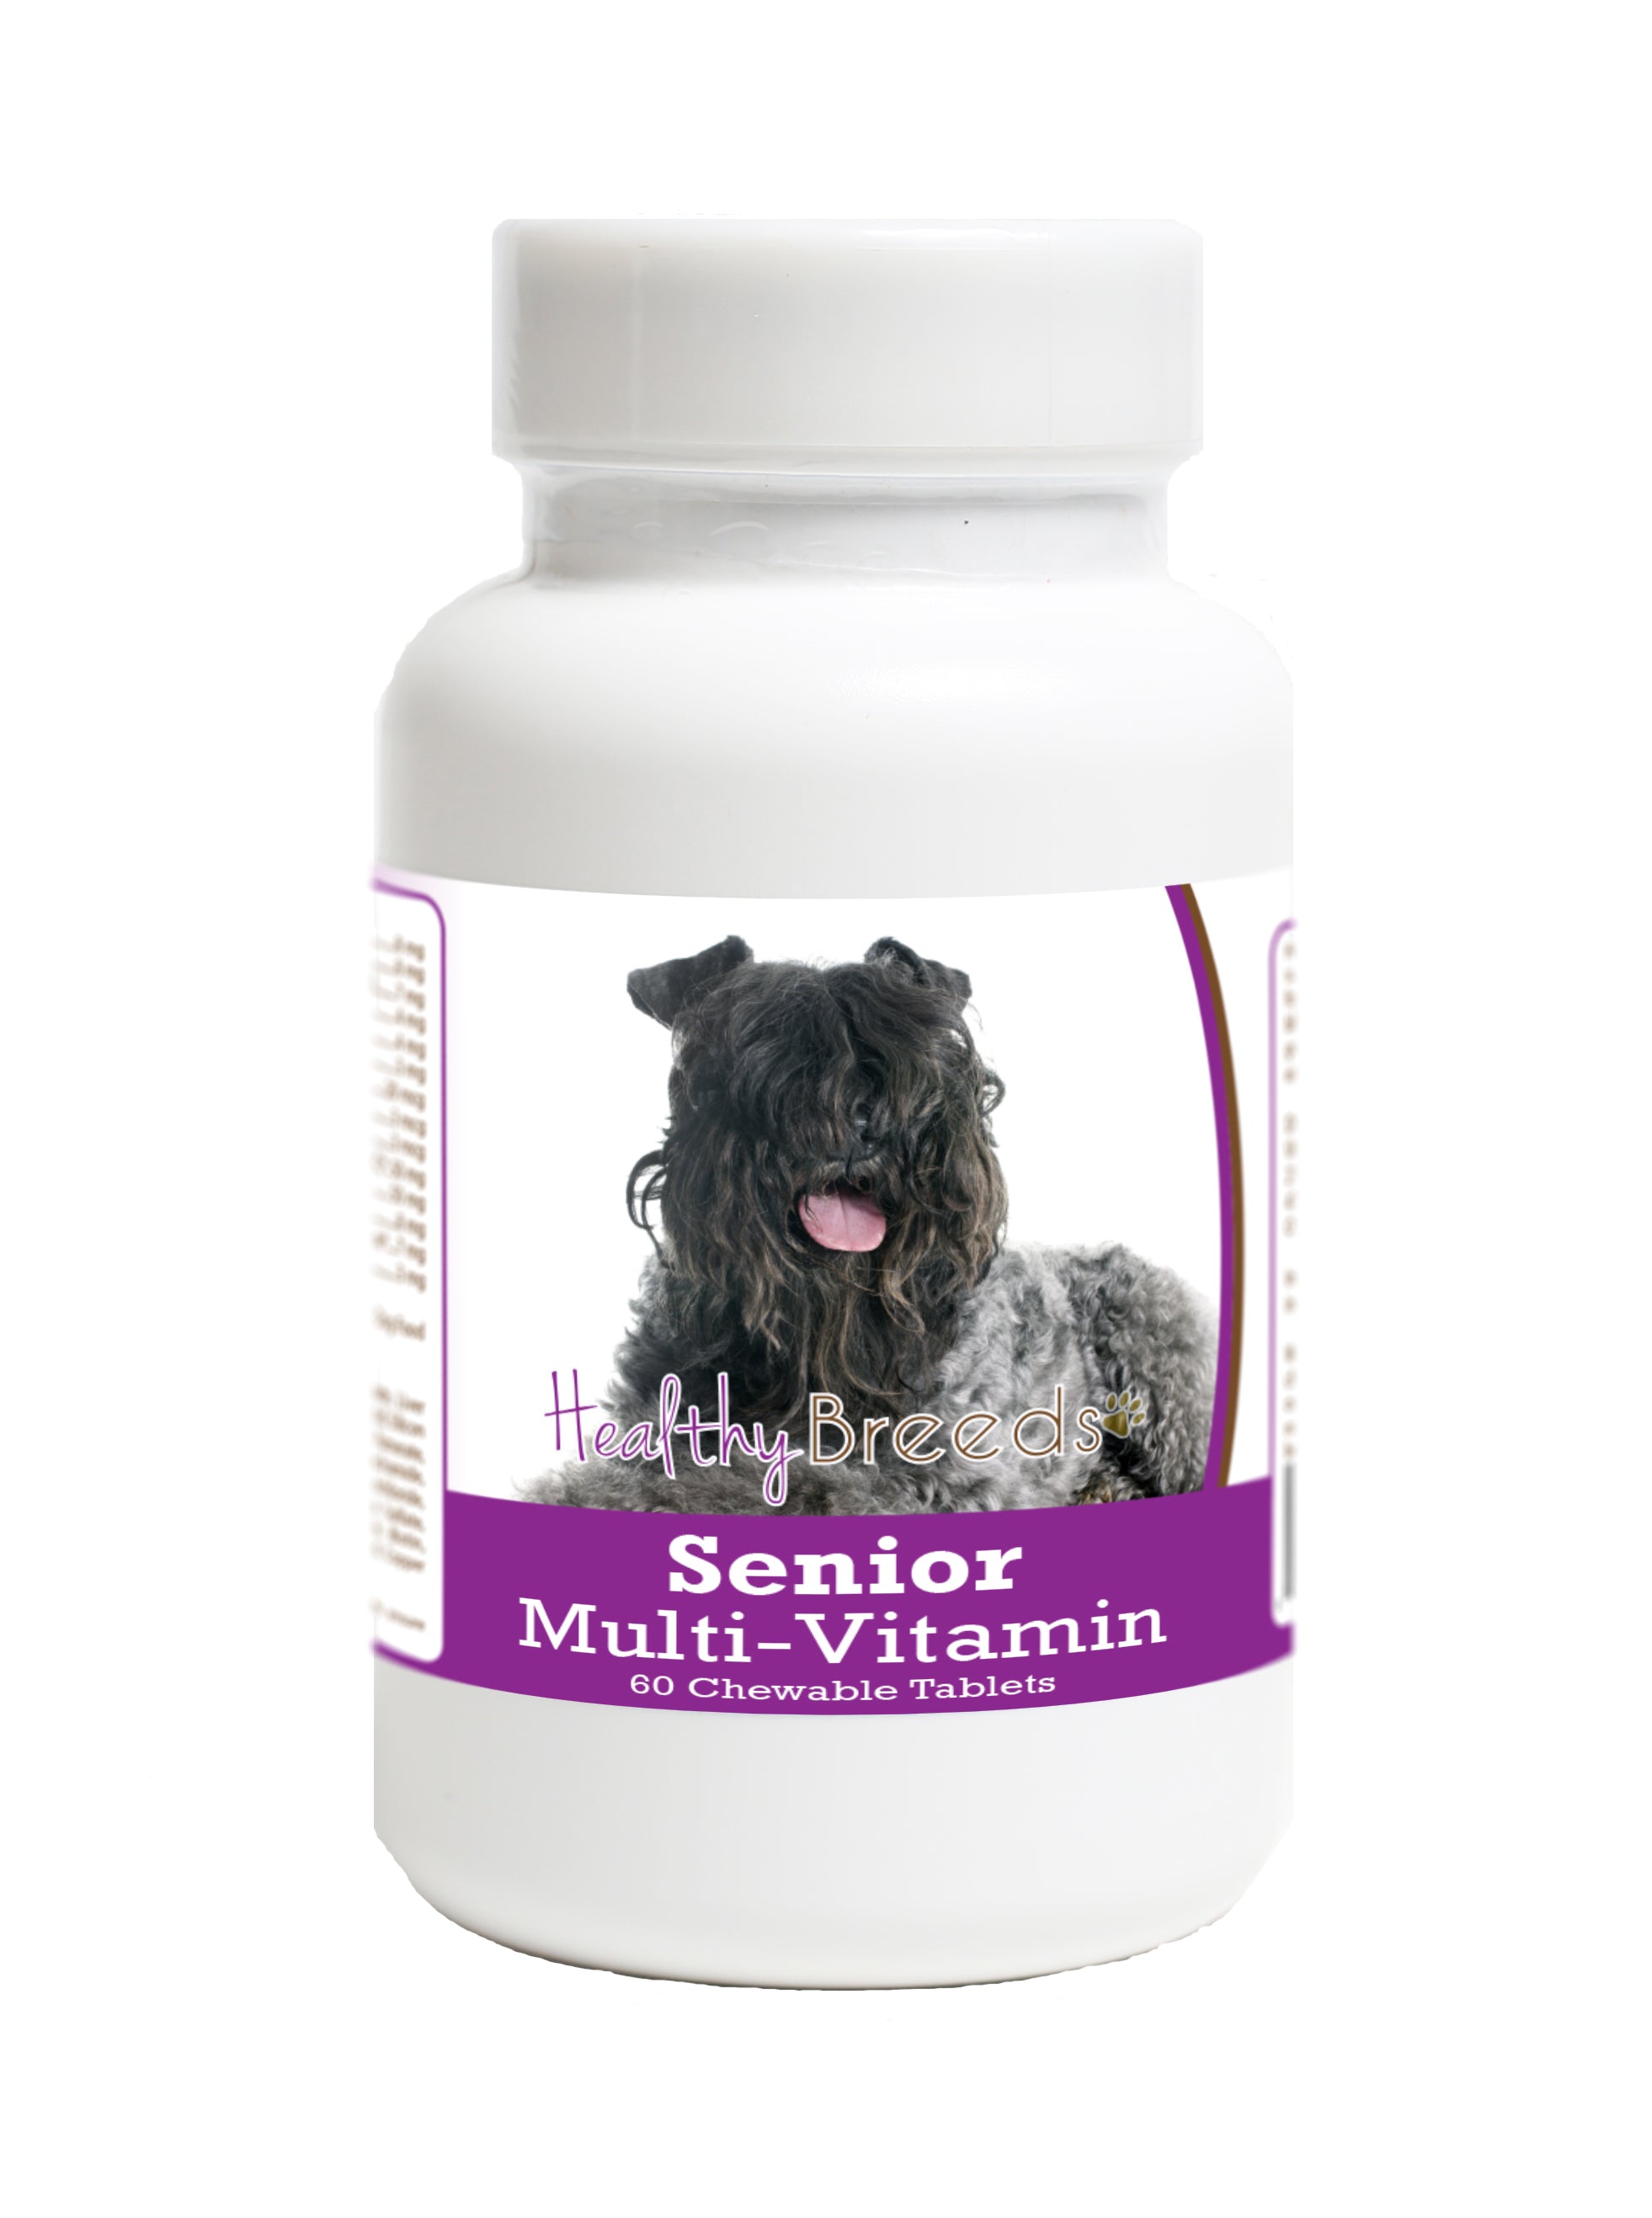 Kerry Blue Terrier Senior Dog Multivitamin Tablets 60 Count